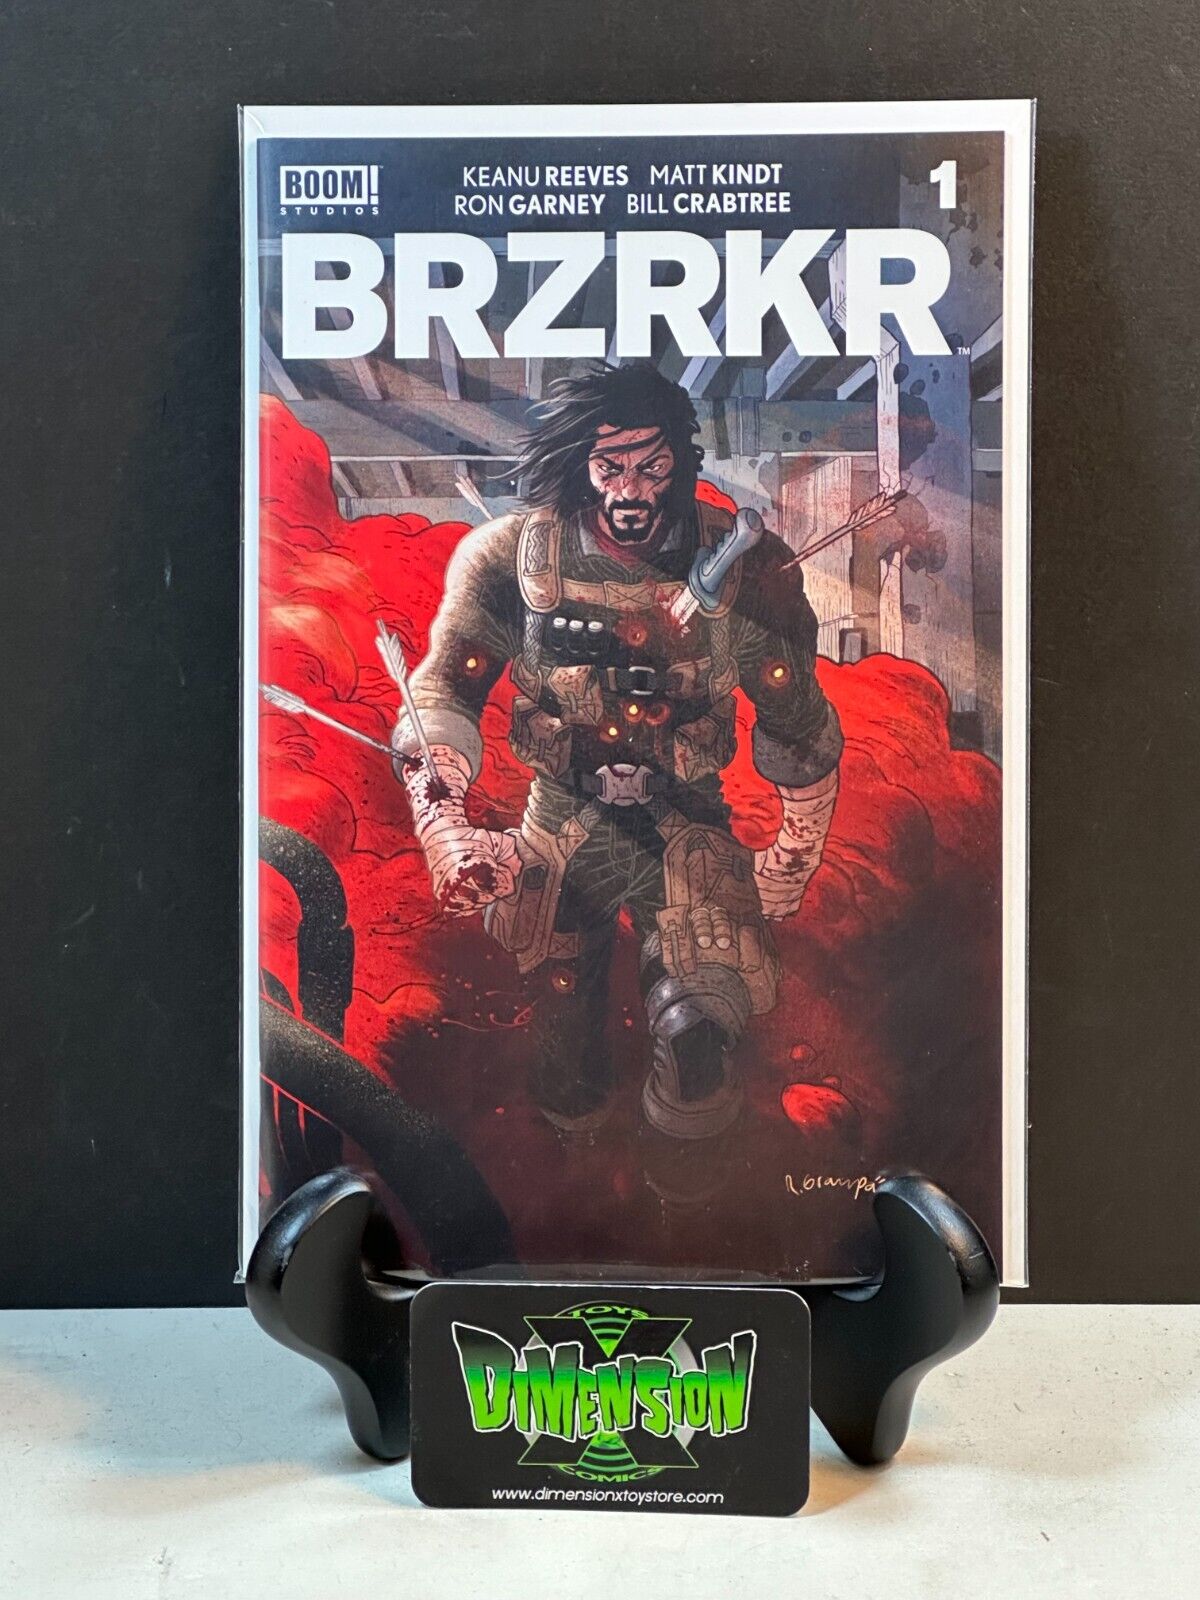 BRZRKR (BERZERKER) #1 GRANDPA COVER A COMIC 1ST PRINT NM BOOM 2021 KEANU REEVES